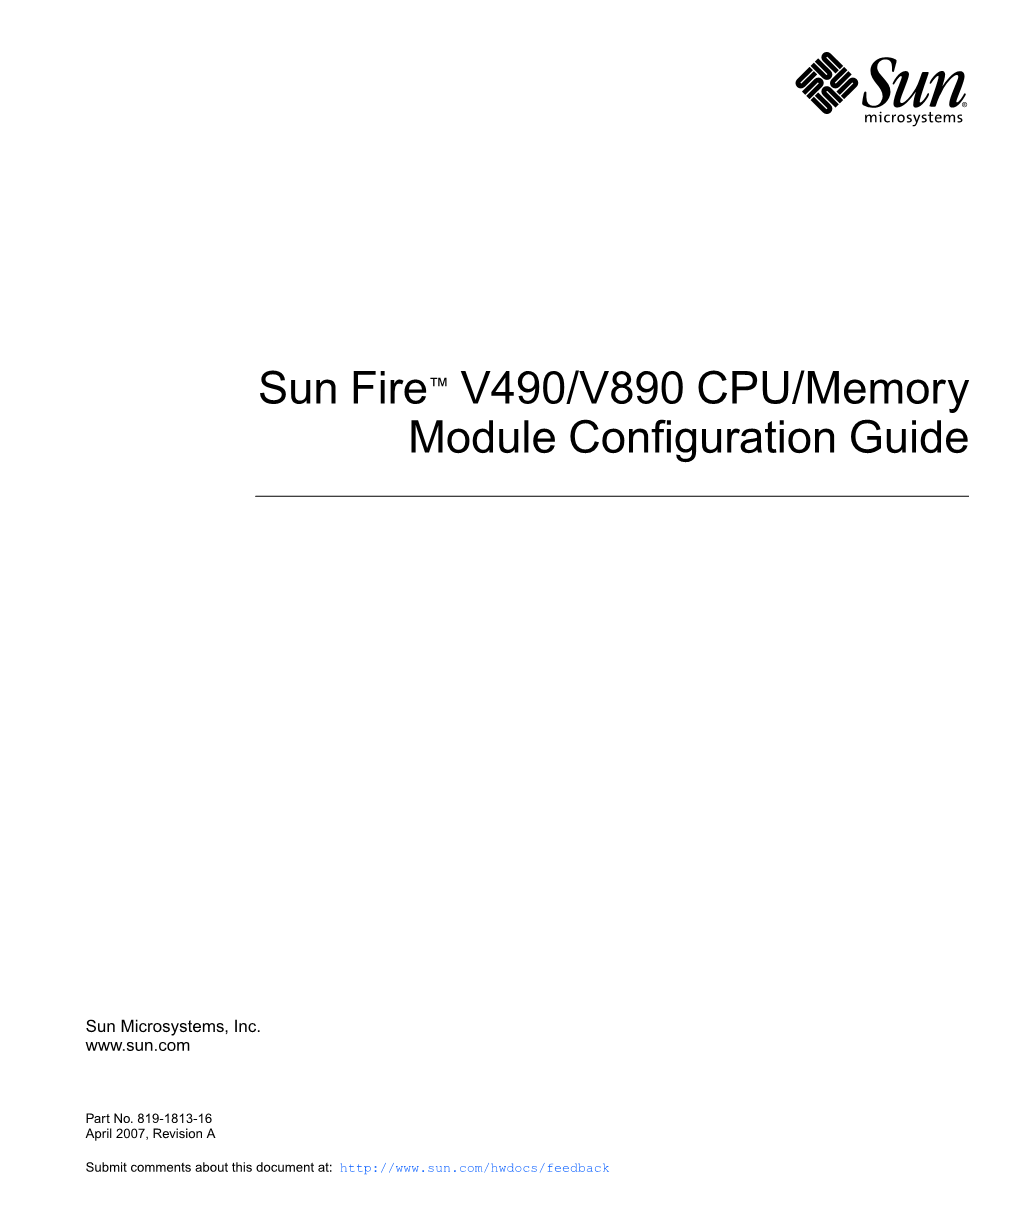 Sun Fire V490/V890 CPU/Memory Module Configuration Guide